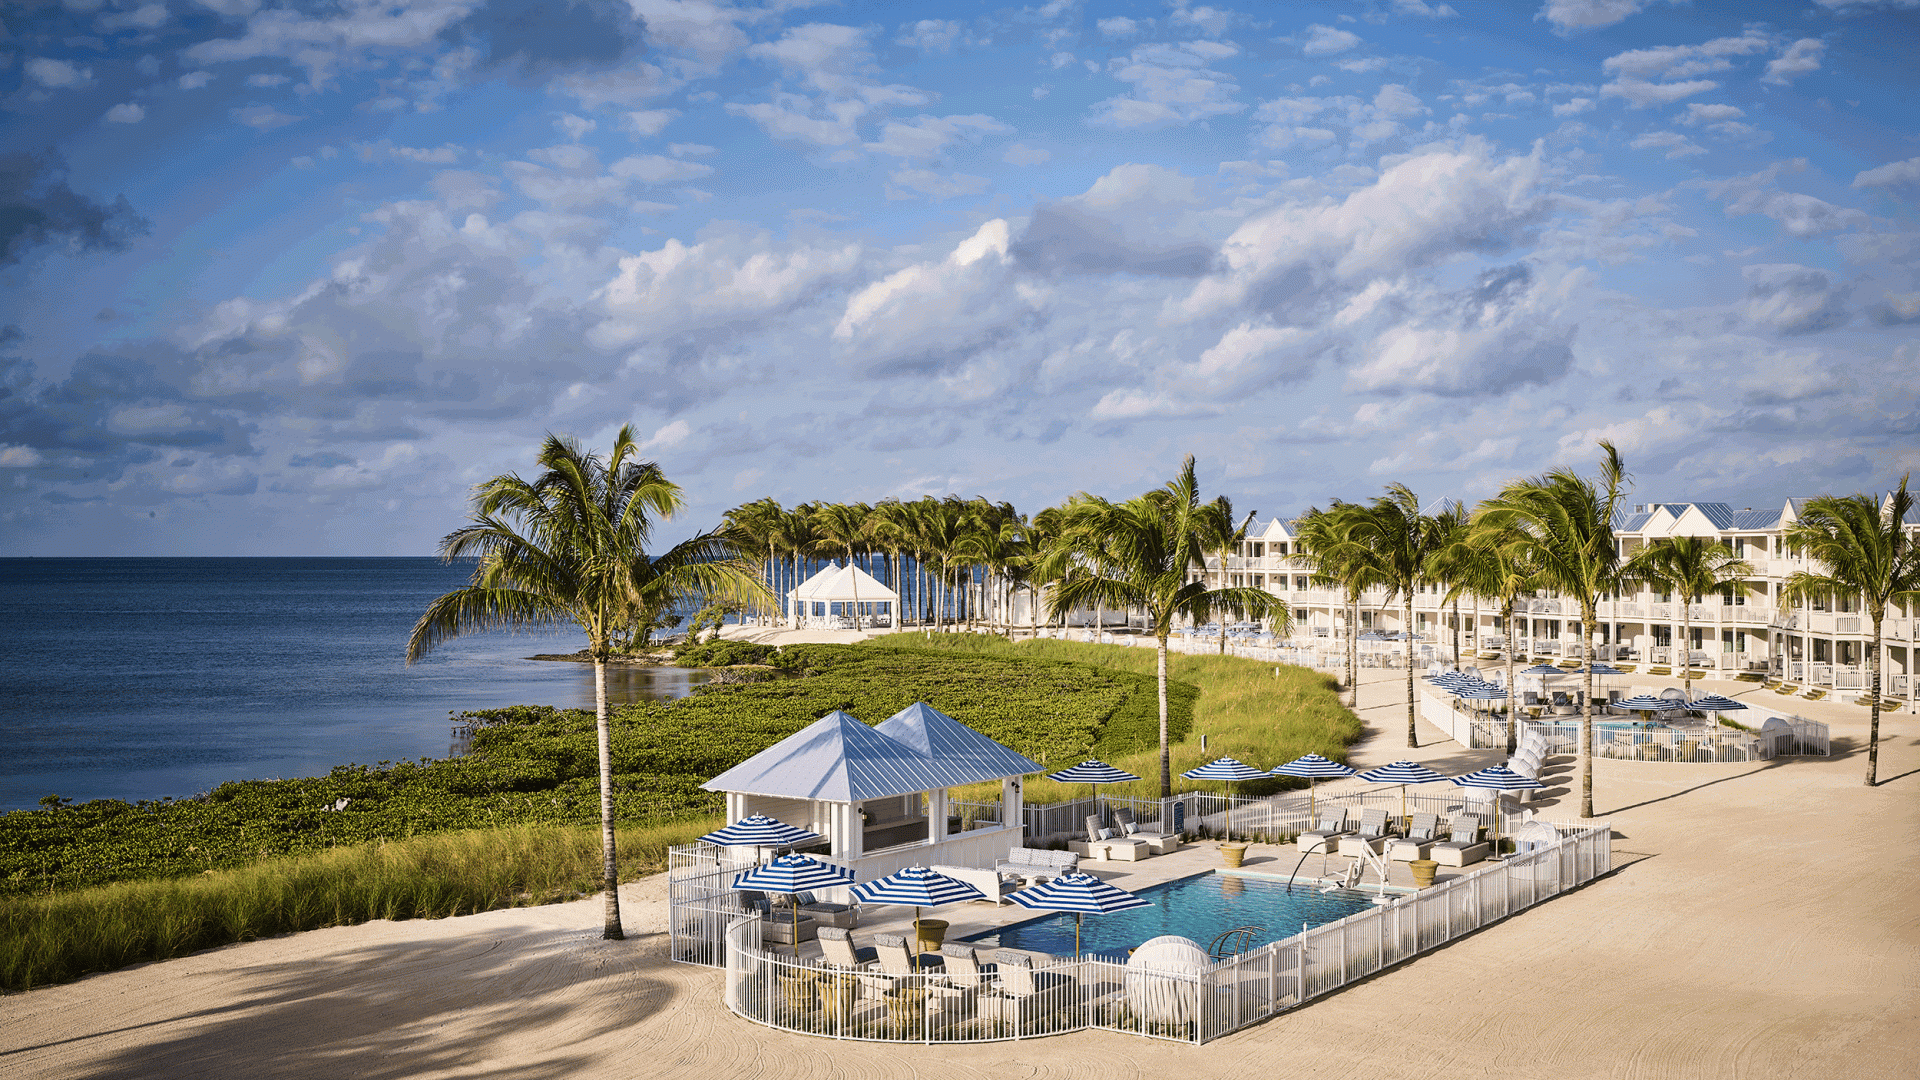 New Beach Resort in the Florida Keys | Isla Bella Beach Resort & Spa